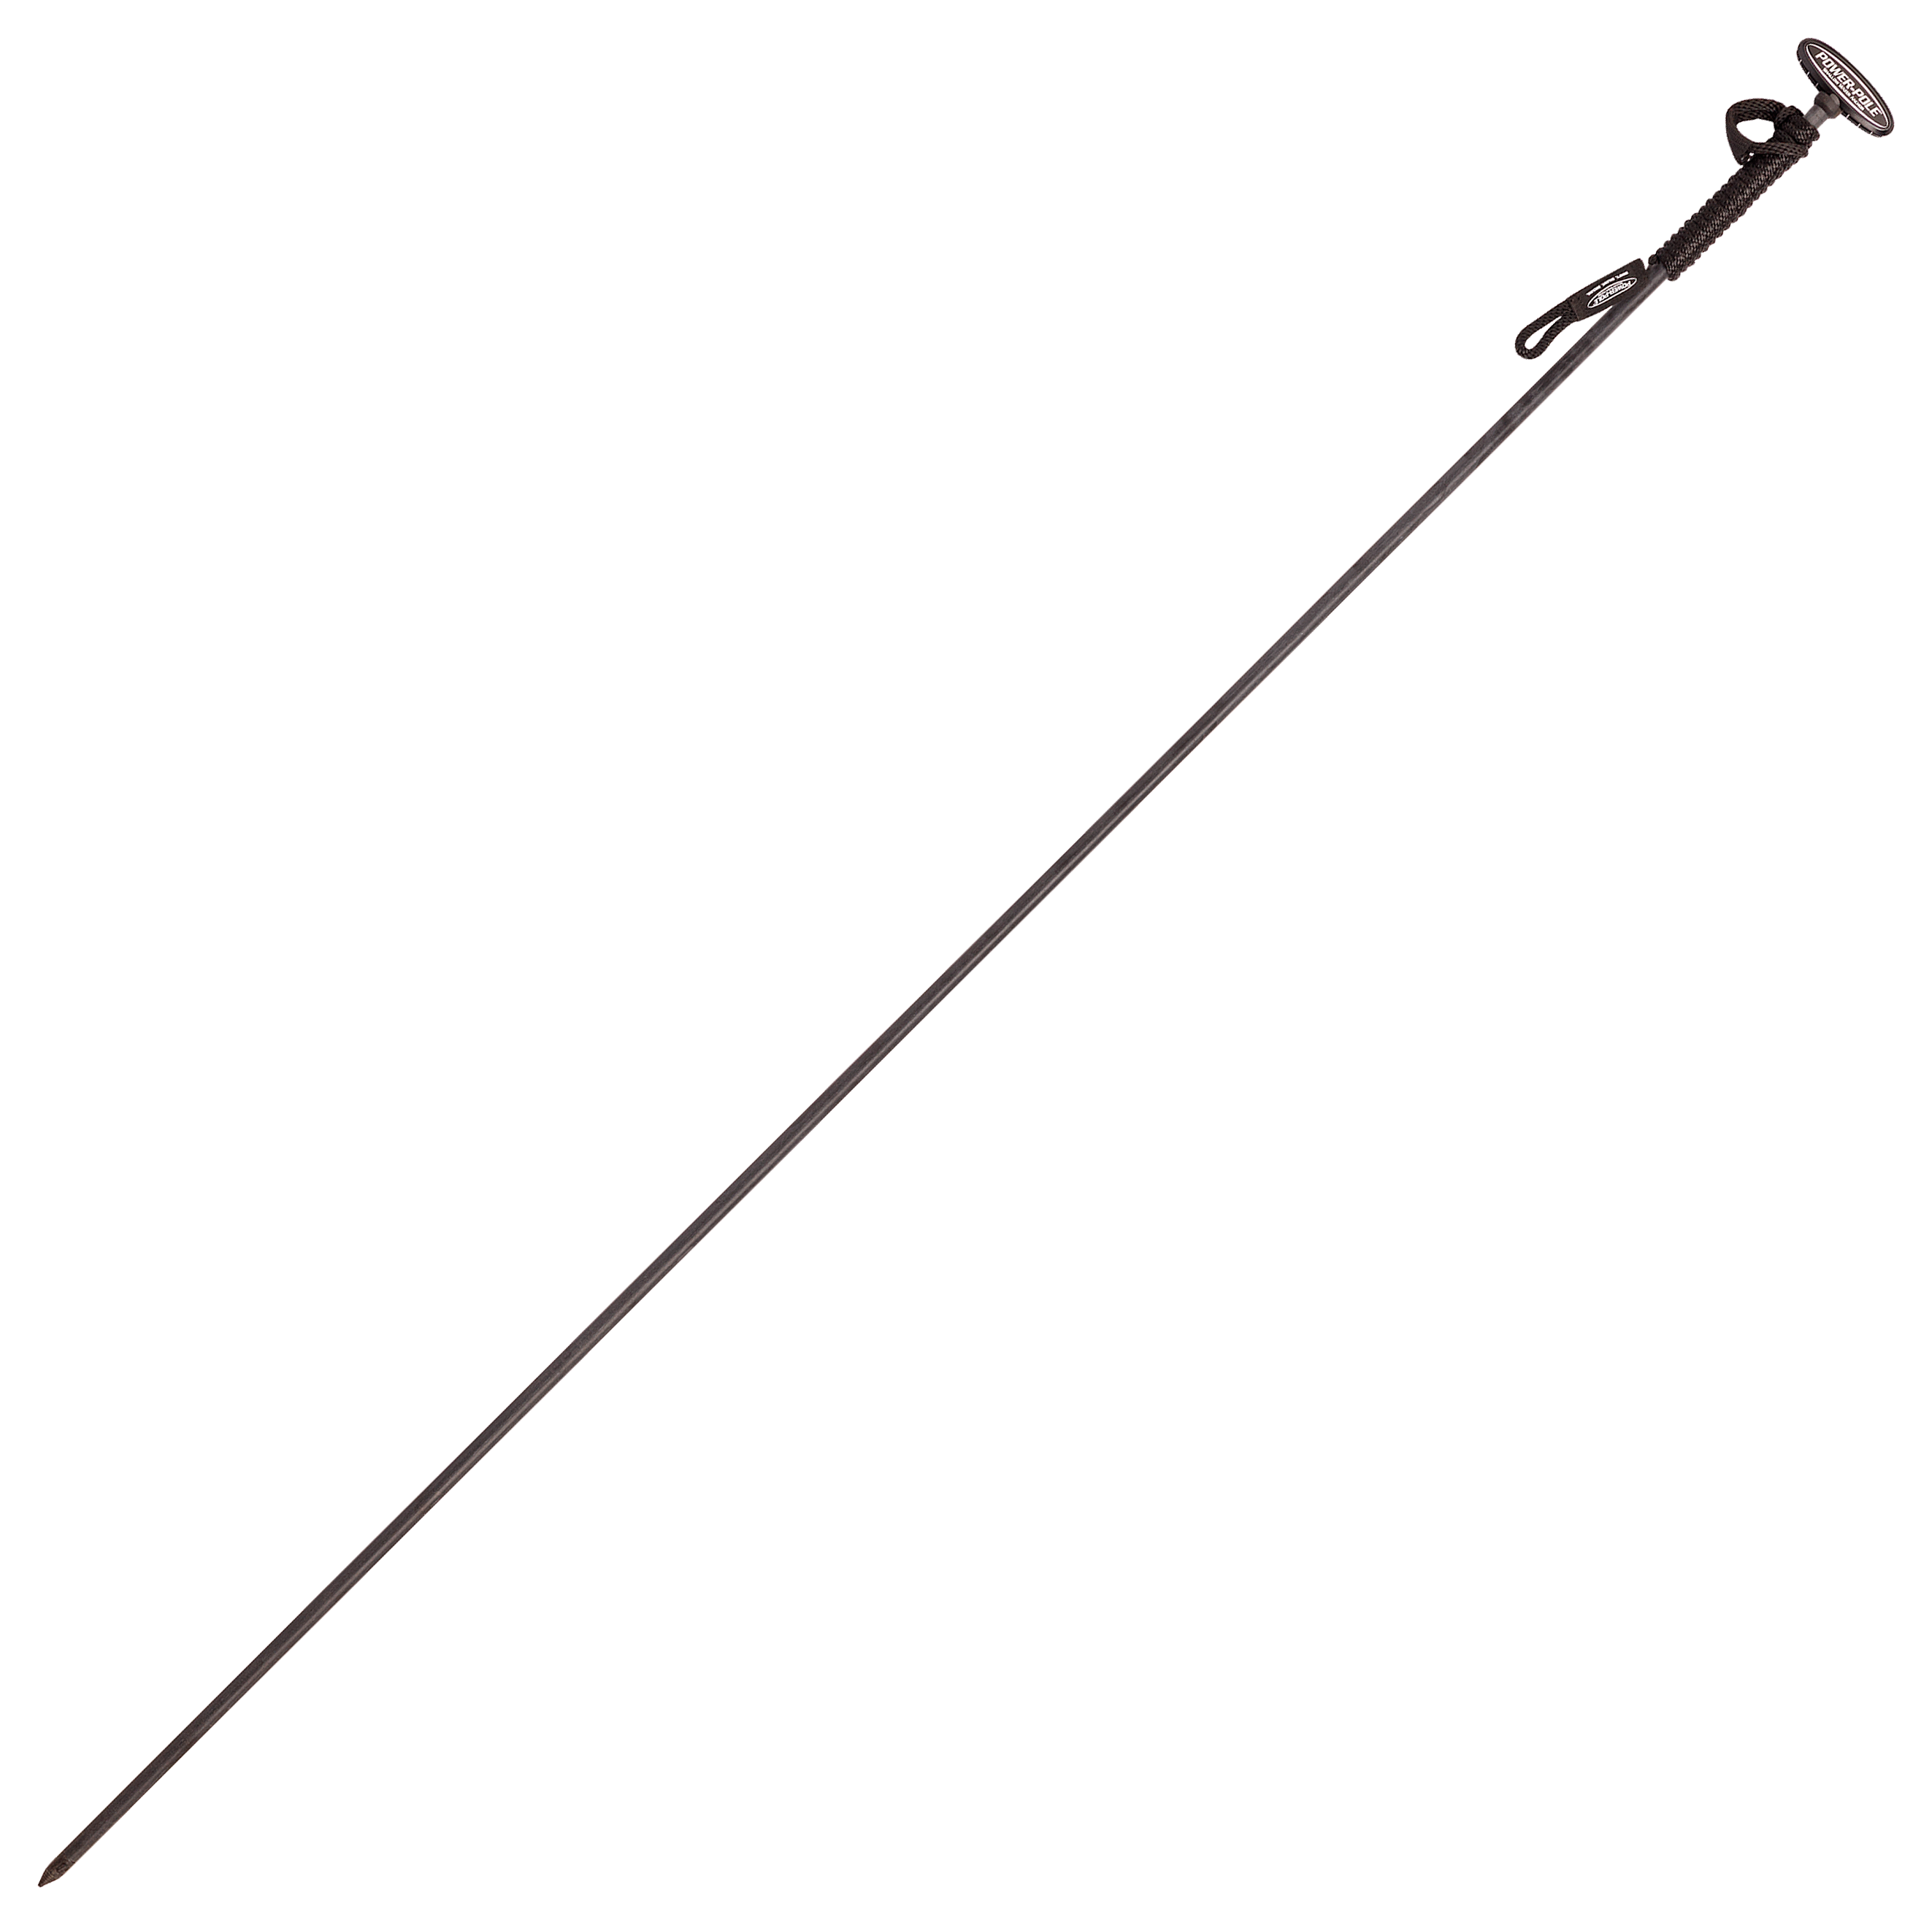 Power-Pole, Power-Pole Micro anchor [Kayak Angler Buyer's Guide]